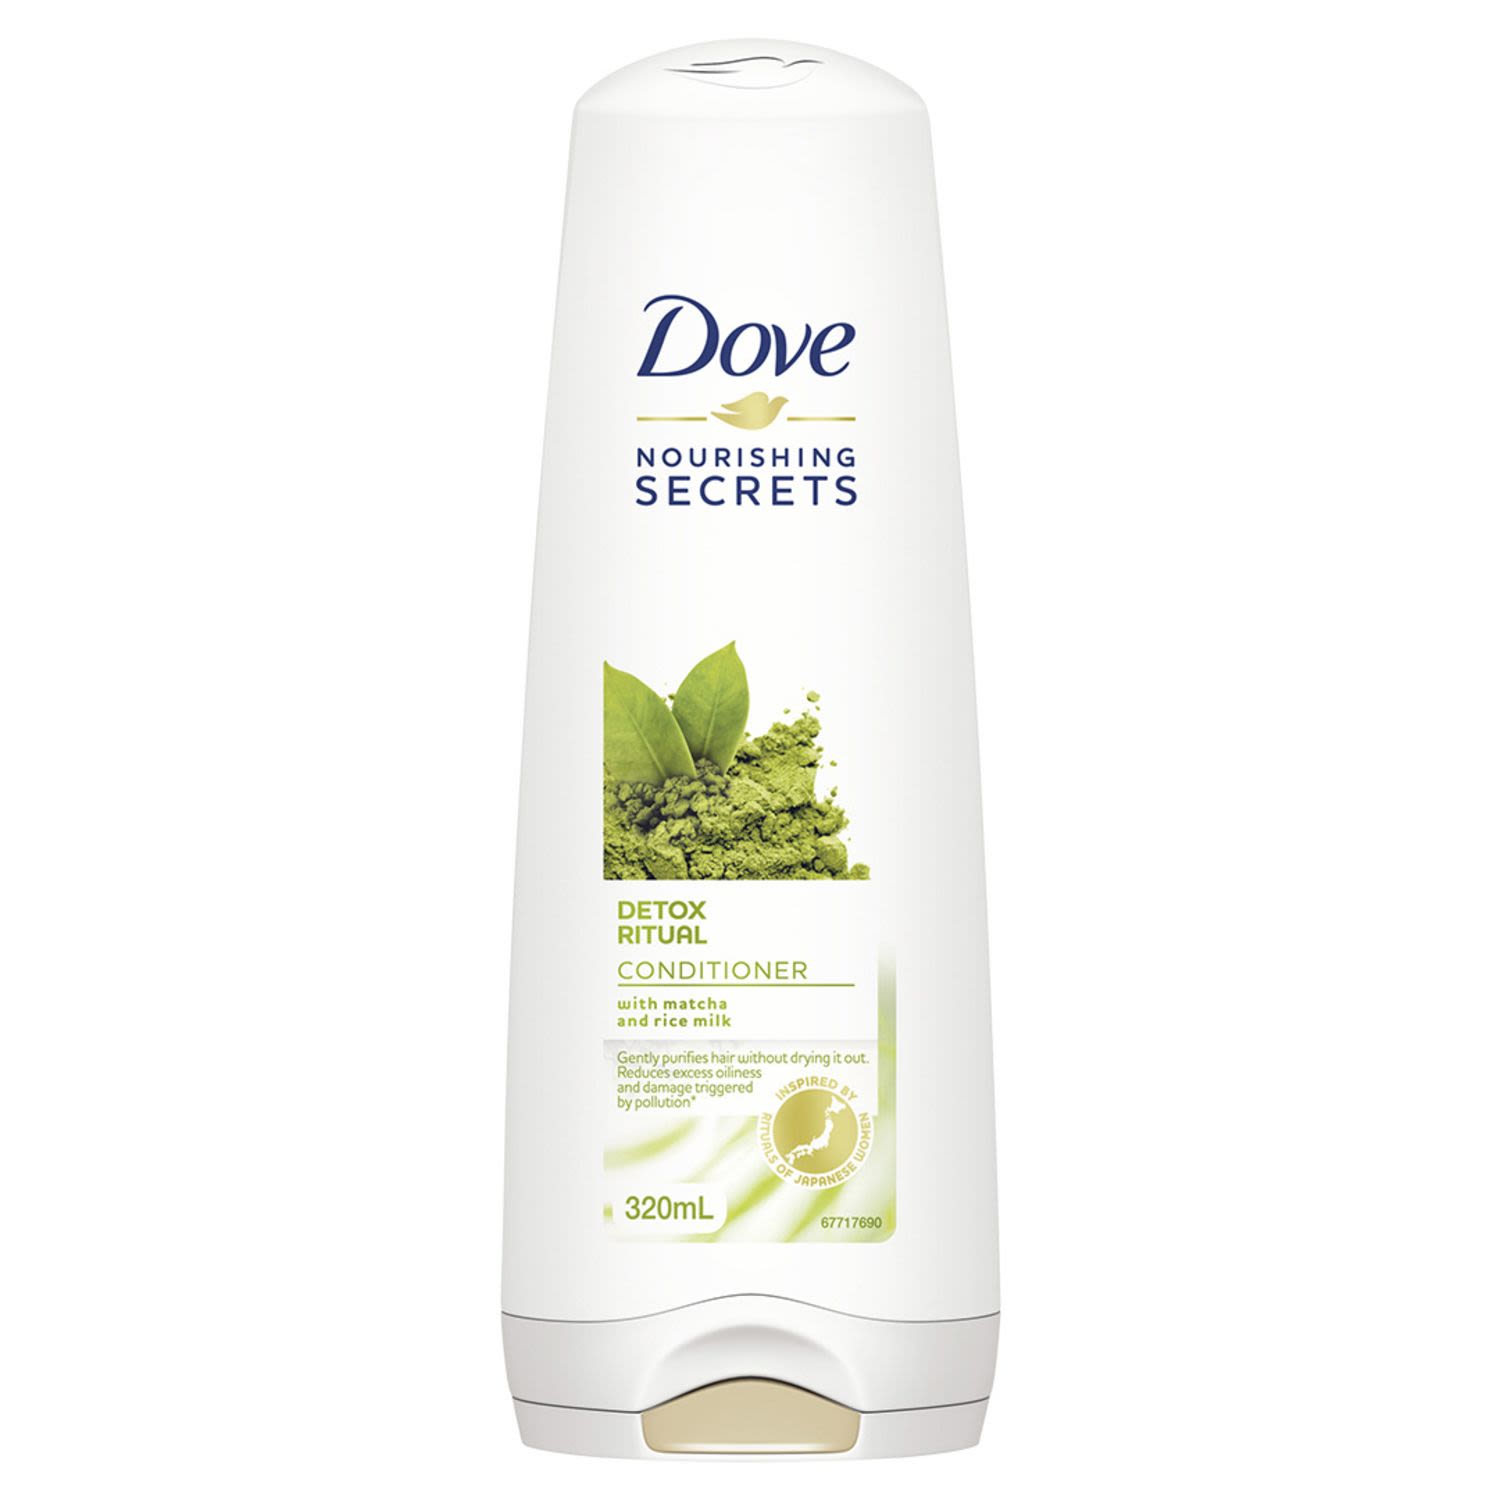 Dove Nourishing Secrets Detox Ritual With Matcha And Rice Milk Conditioner, 320 Millilitre